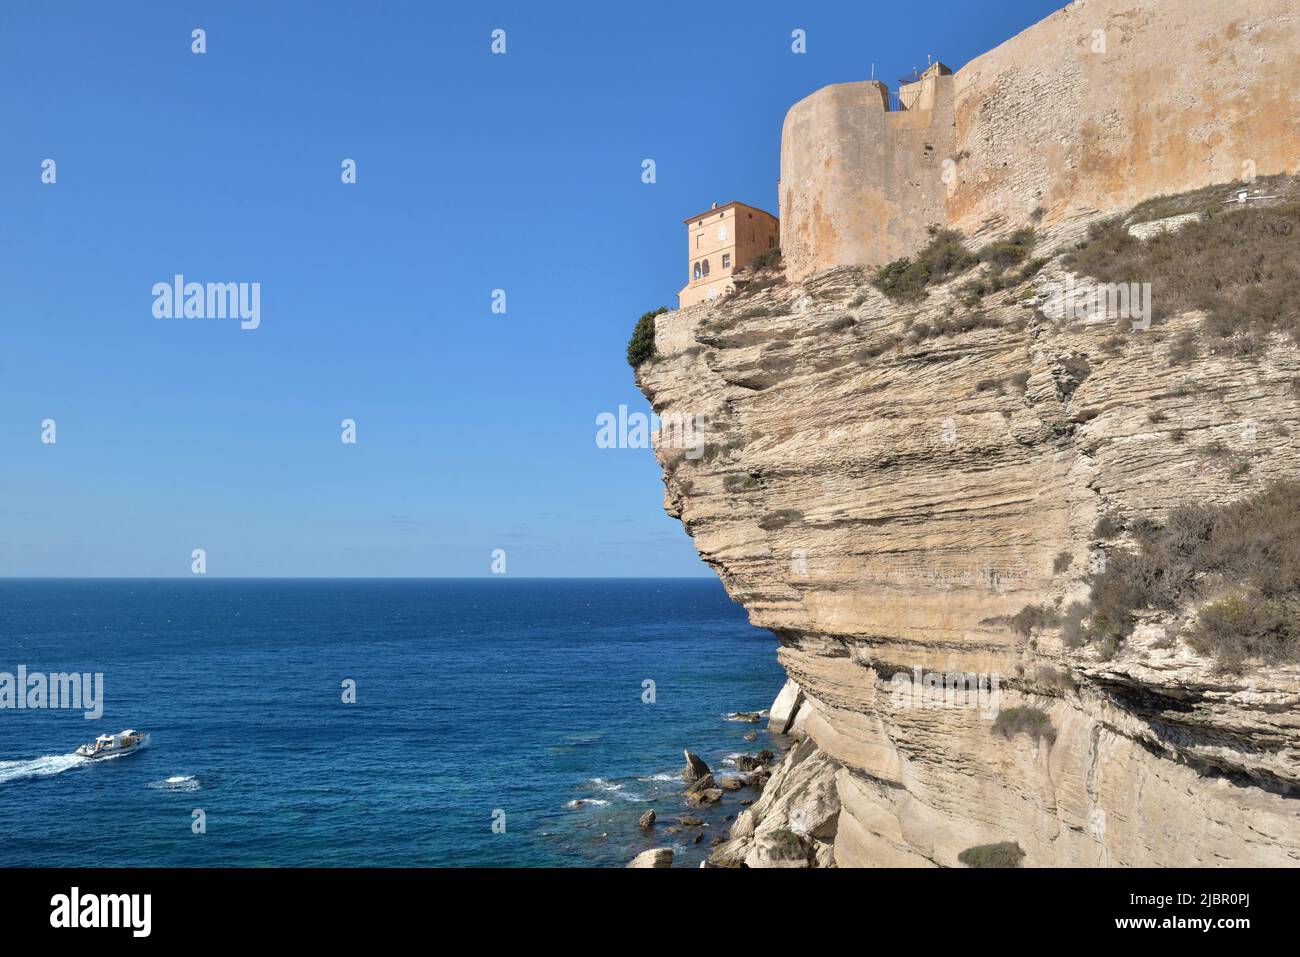 rampart above limestone cliff fo city Bonifacio in Corsica overlooking the sea on clear blue sky Stock Photo